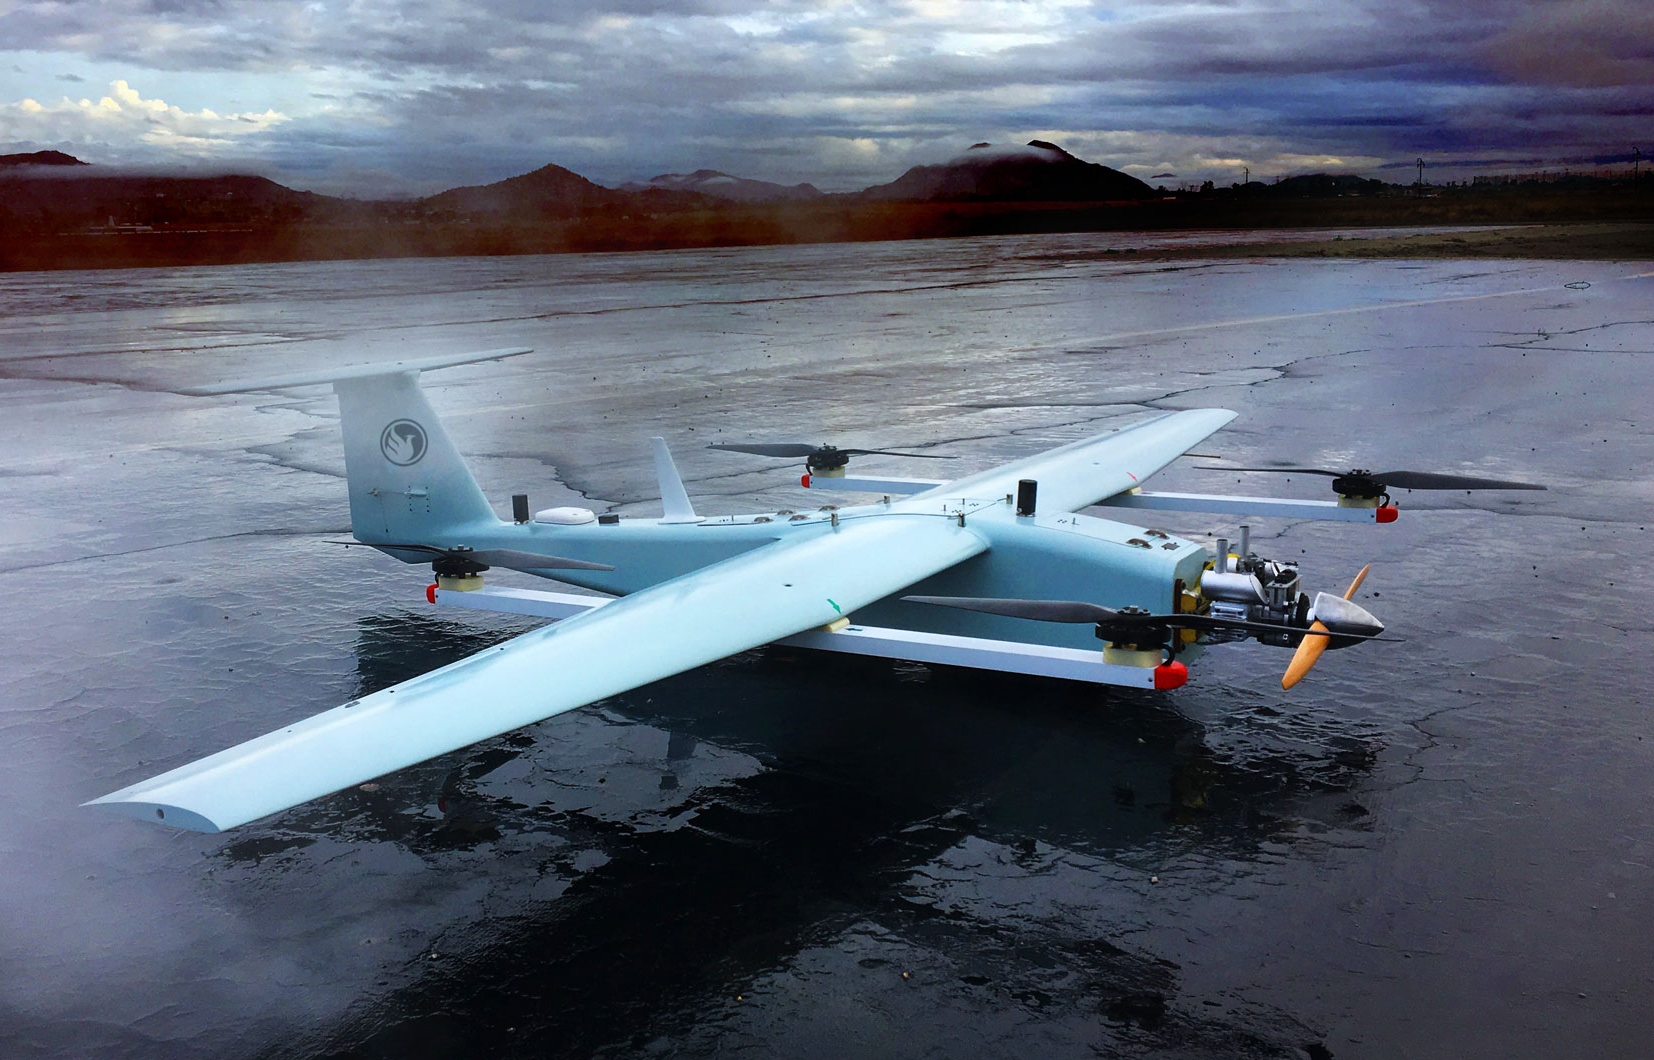 Phoenix TerraHawk CW-20 UAV features Velodyne HDL-32E LiDAR sensor